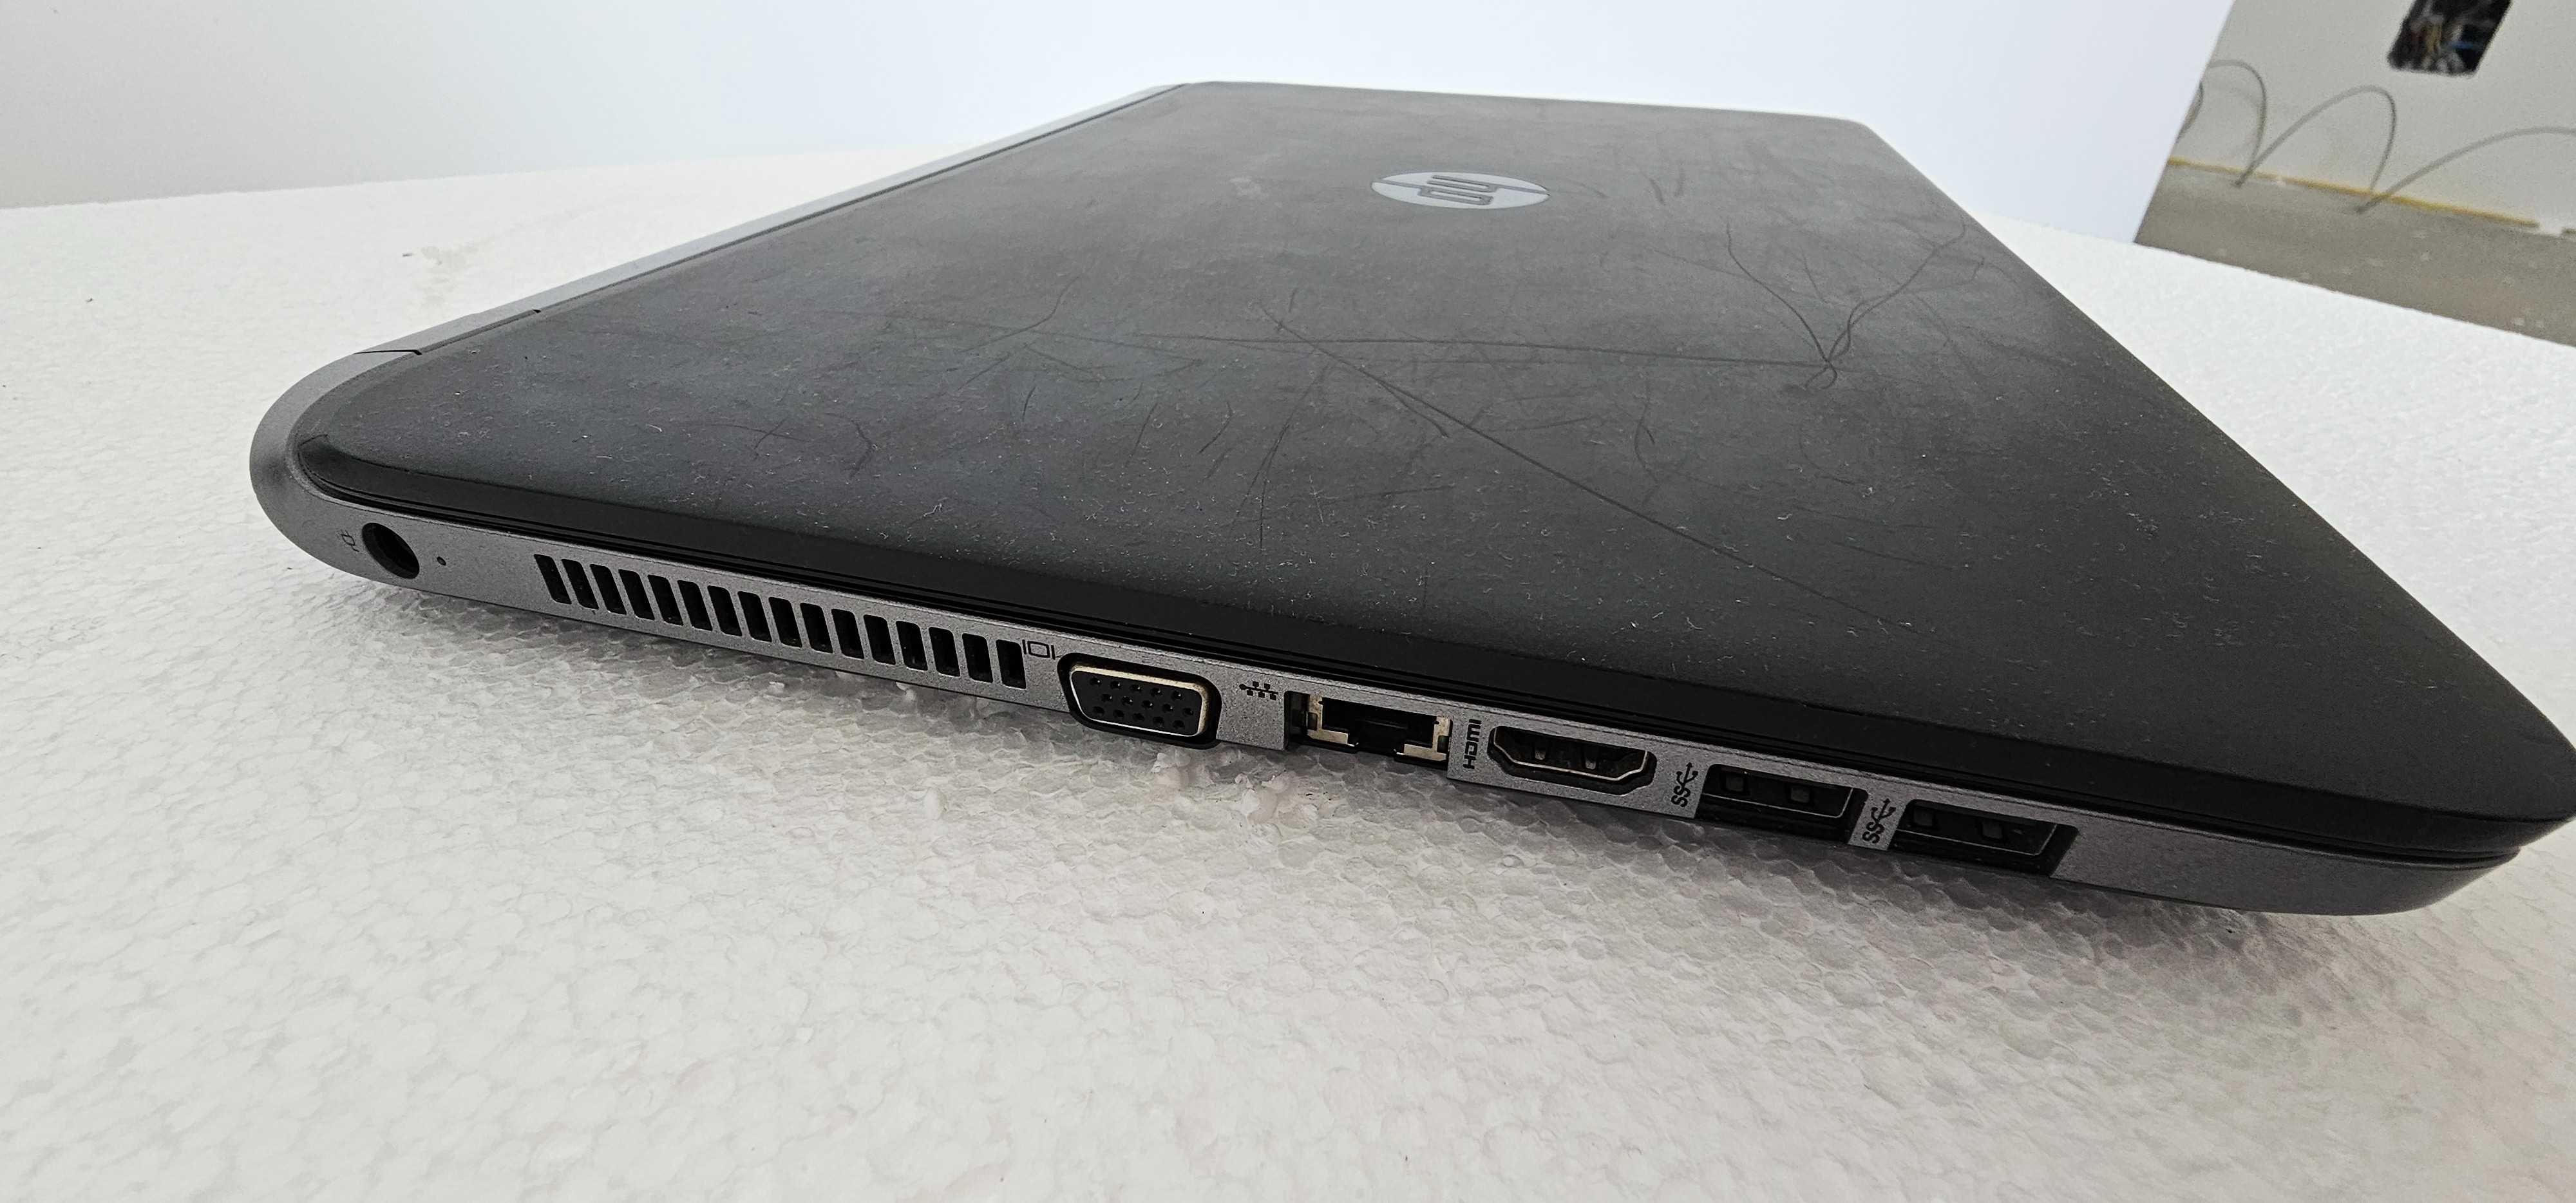 Laptop HP 450 G2 - 15.6" display -CPU i5 -8GB RAM -250GB SSD